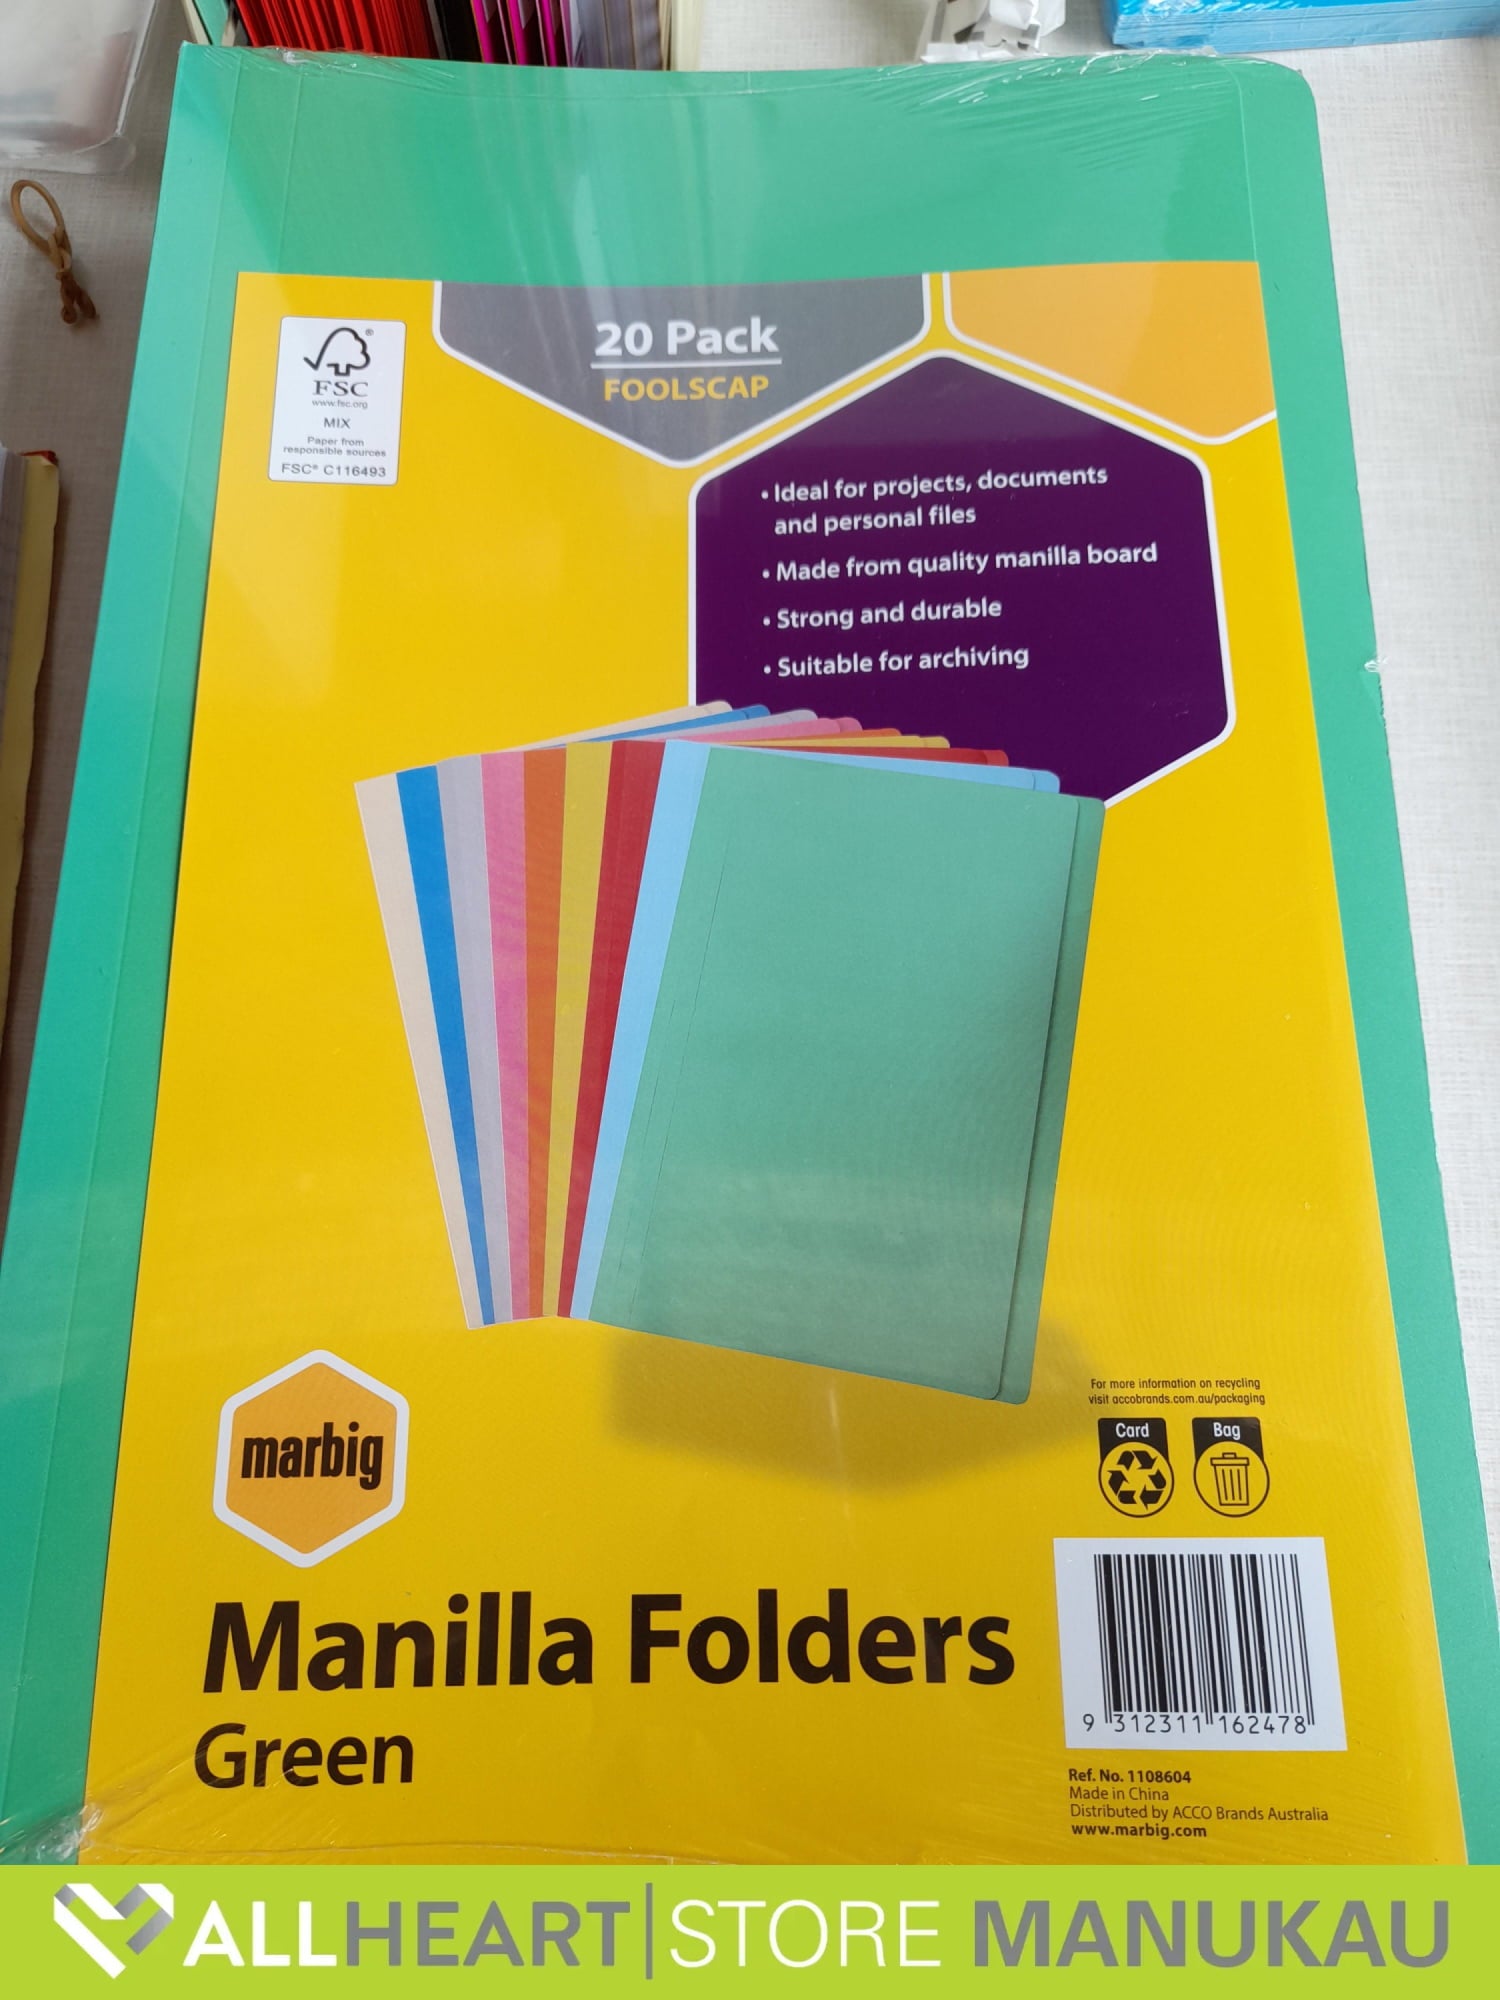 Manilla Folders - Green 20 Pack